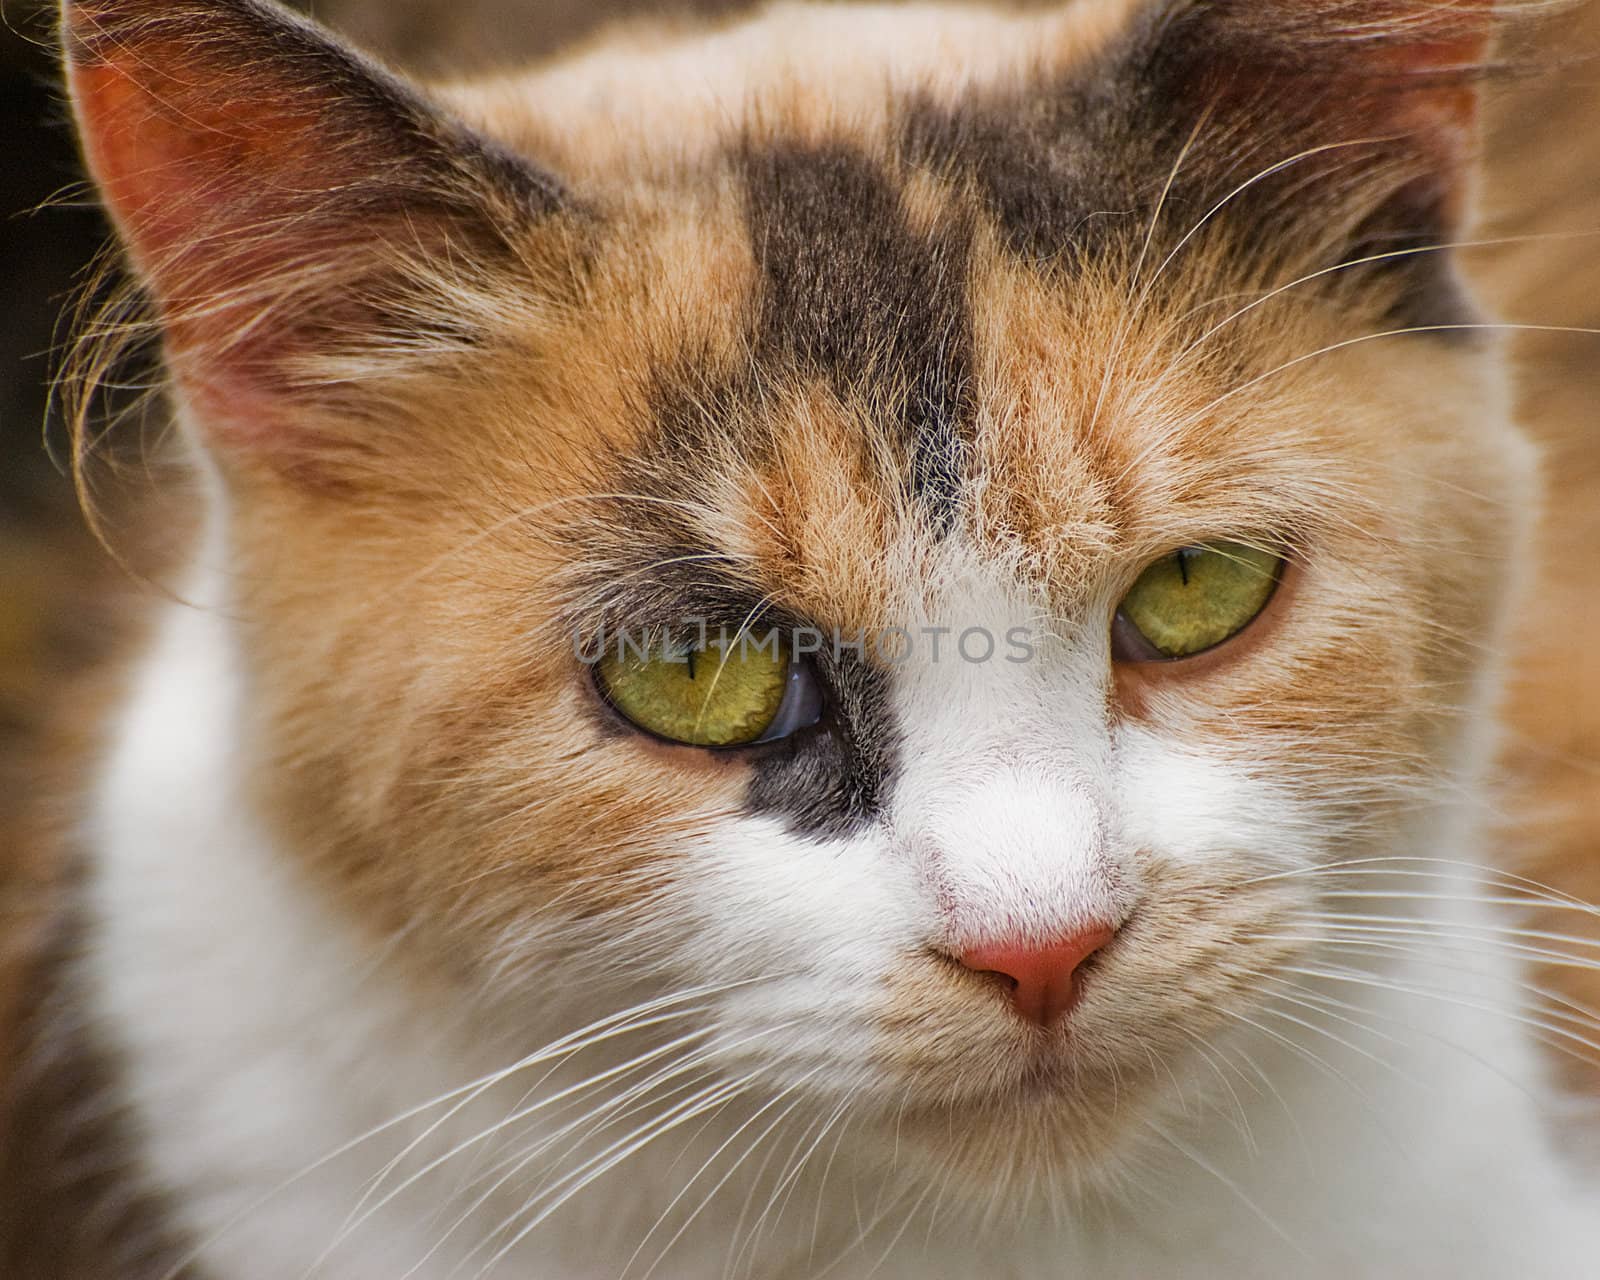 A close up image of a cat.